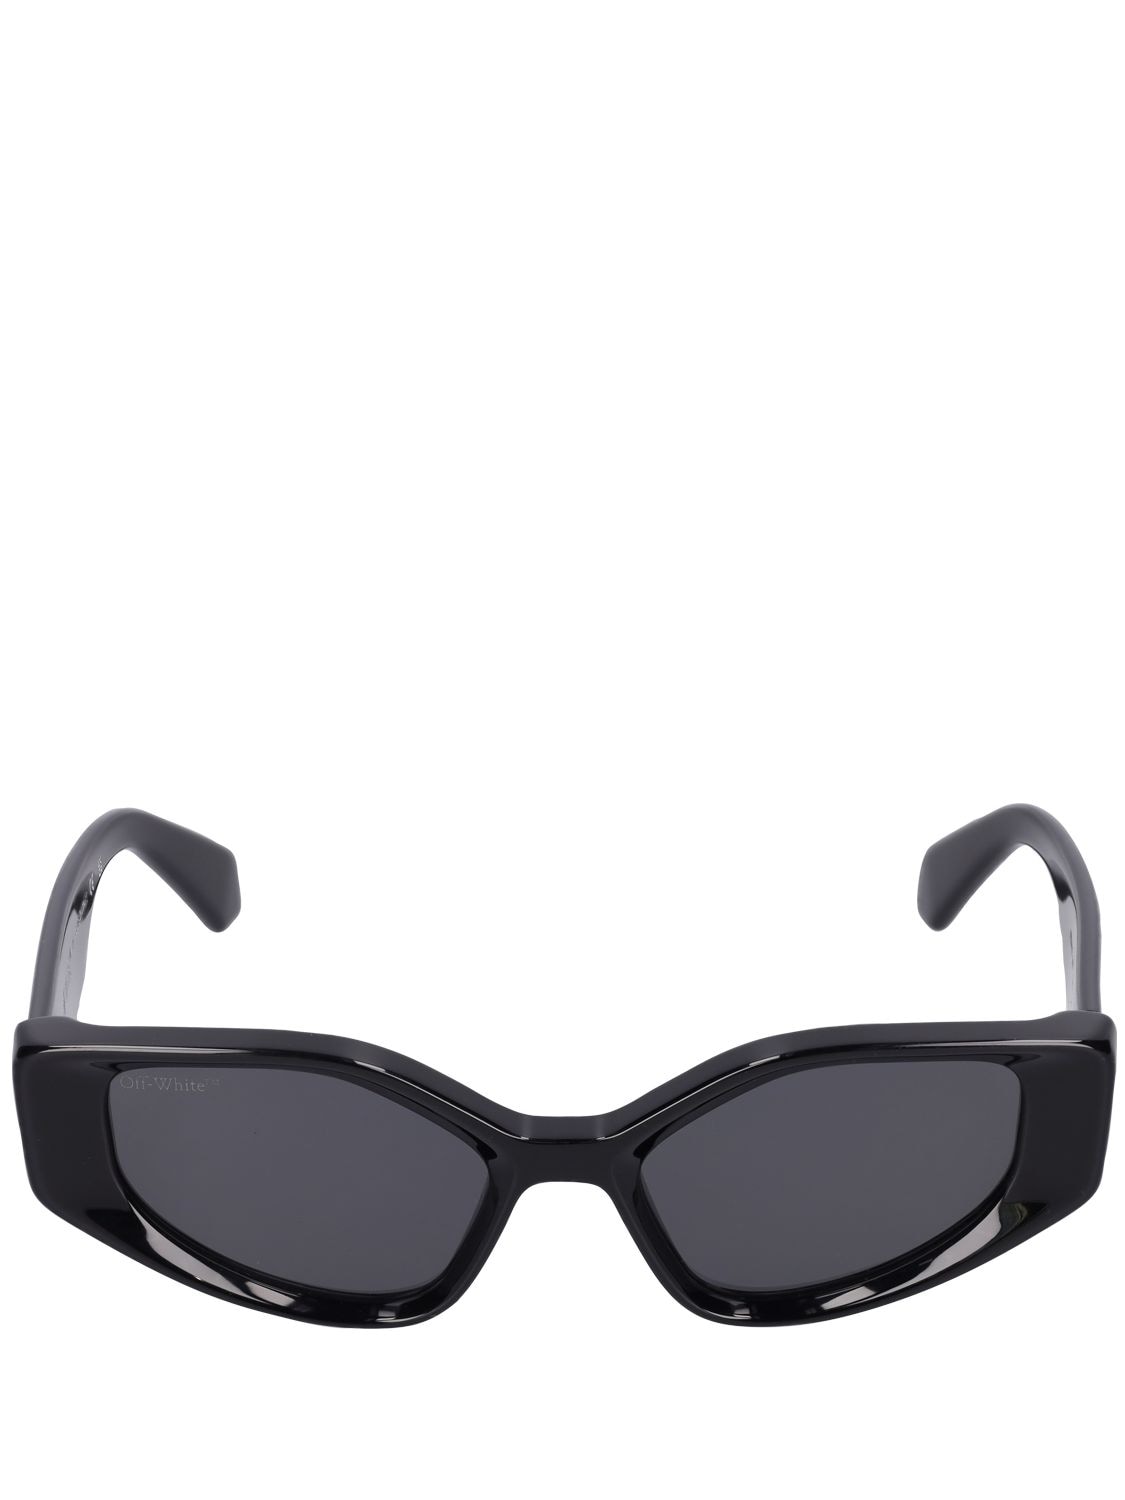 Off-White c/o Virgil Abloh Venezia Cat-eye Frame Sunglasses in Gray